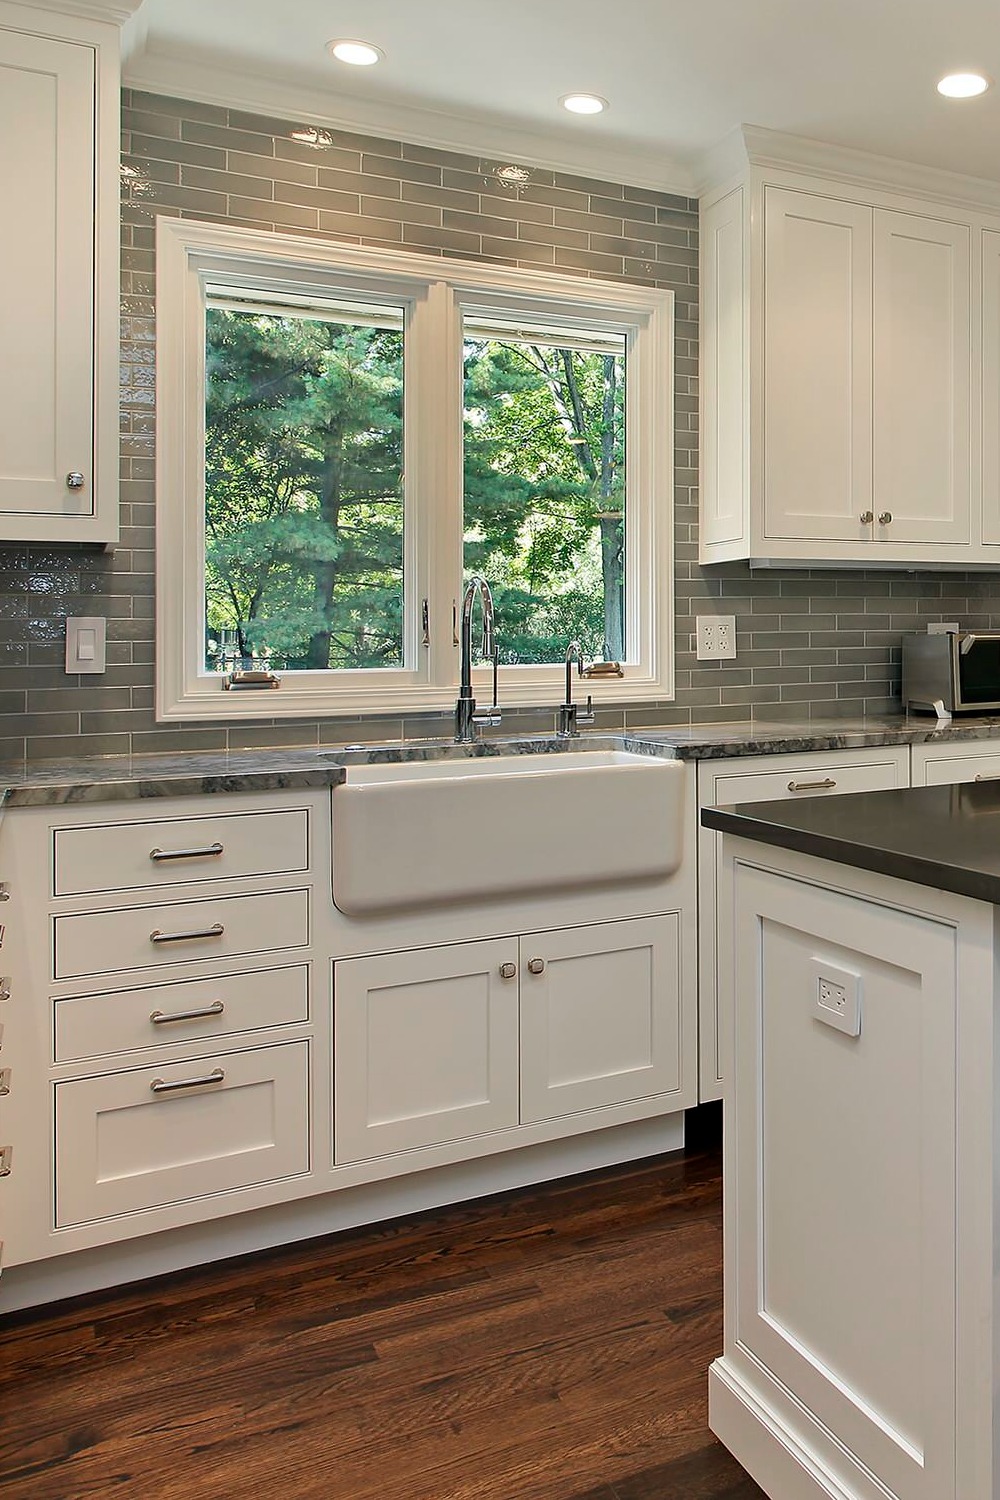 Shaker Cabinets Kitchen Backsplash Tile Gray Backsplash Marble Countertop Space Wood Tiles